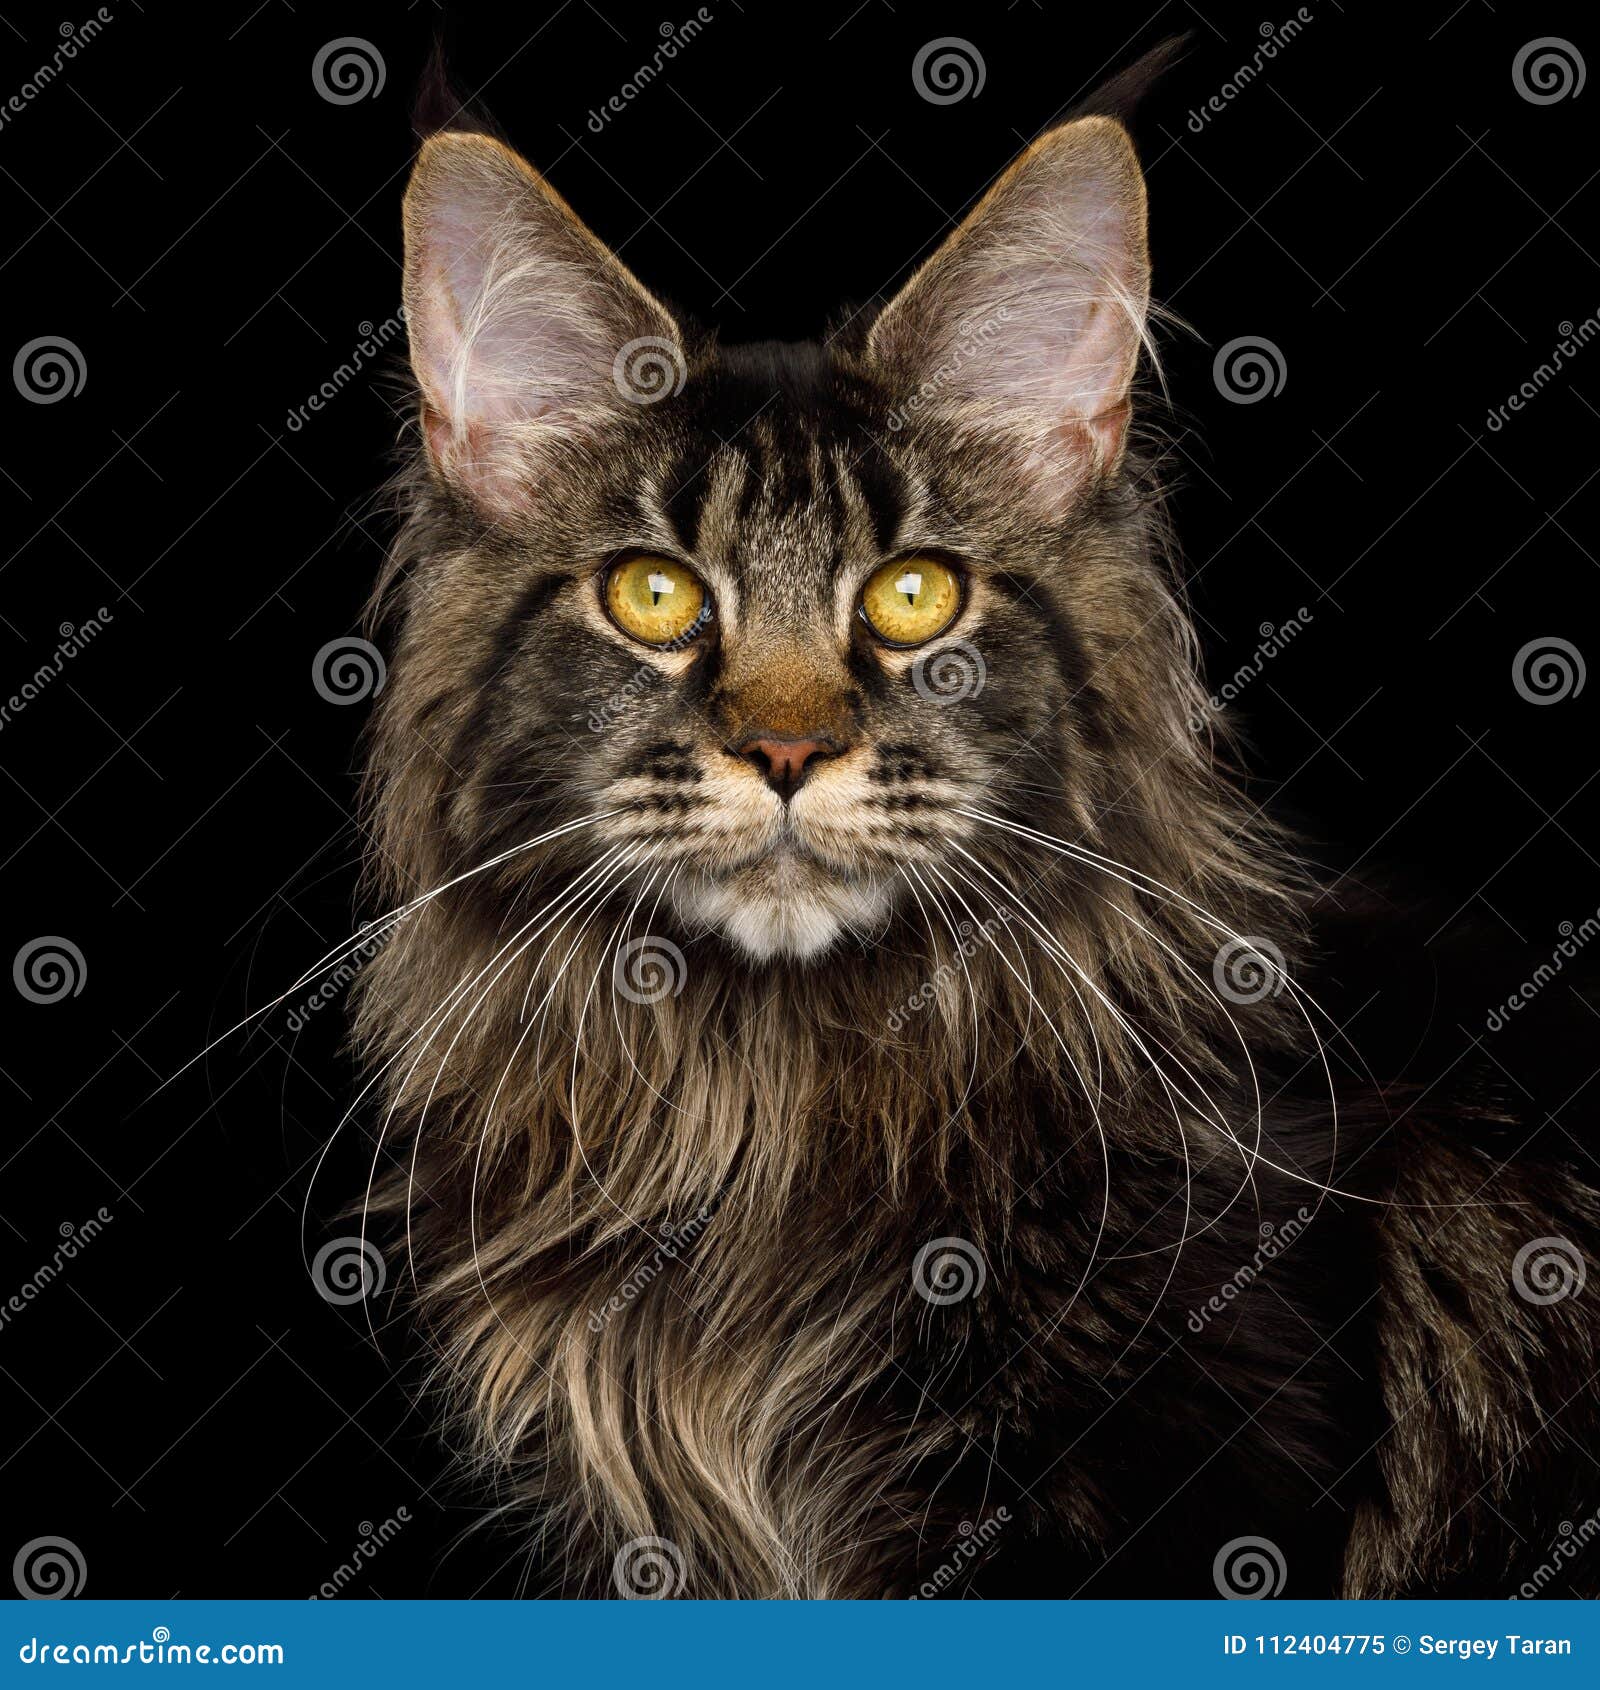 Huge Maine Coon Cat Isolated On Black Background Stock Image Image Of Face Feline 112404775